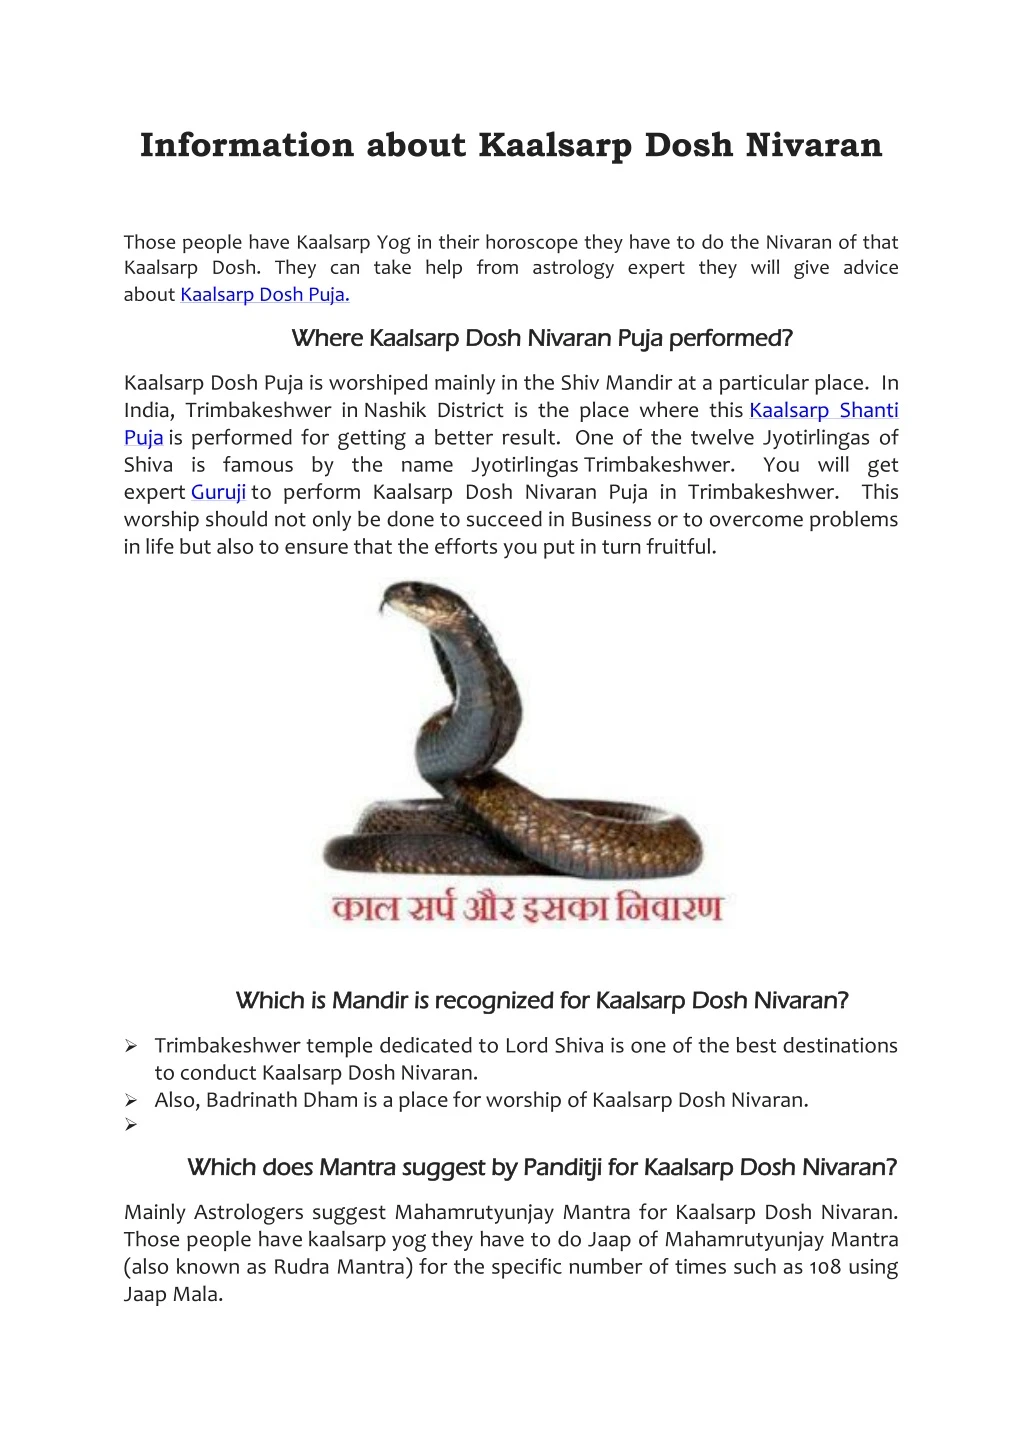 information about kaalsarp dosh nivaran